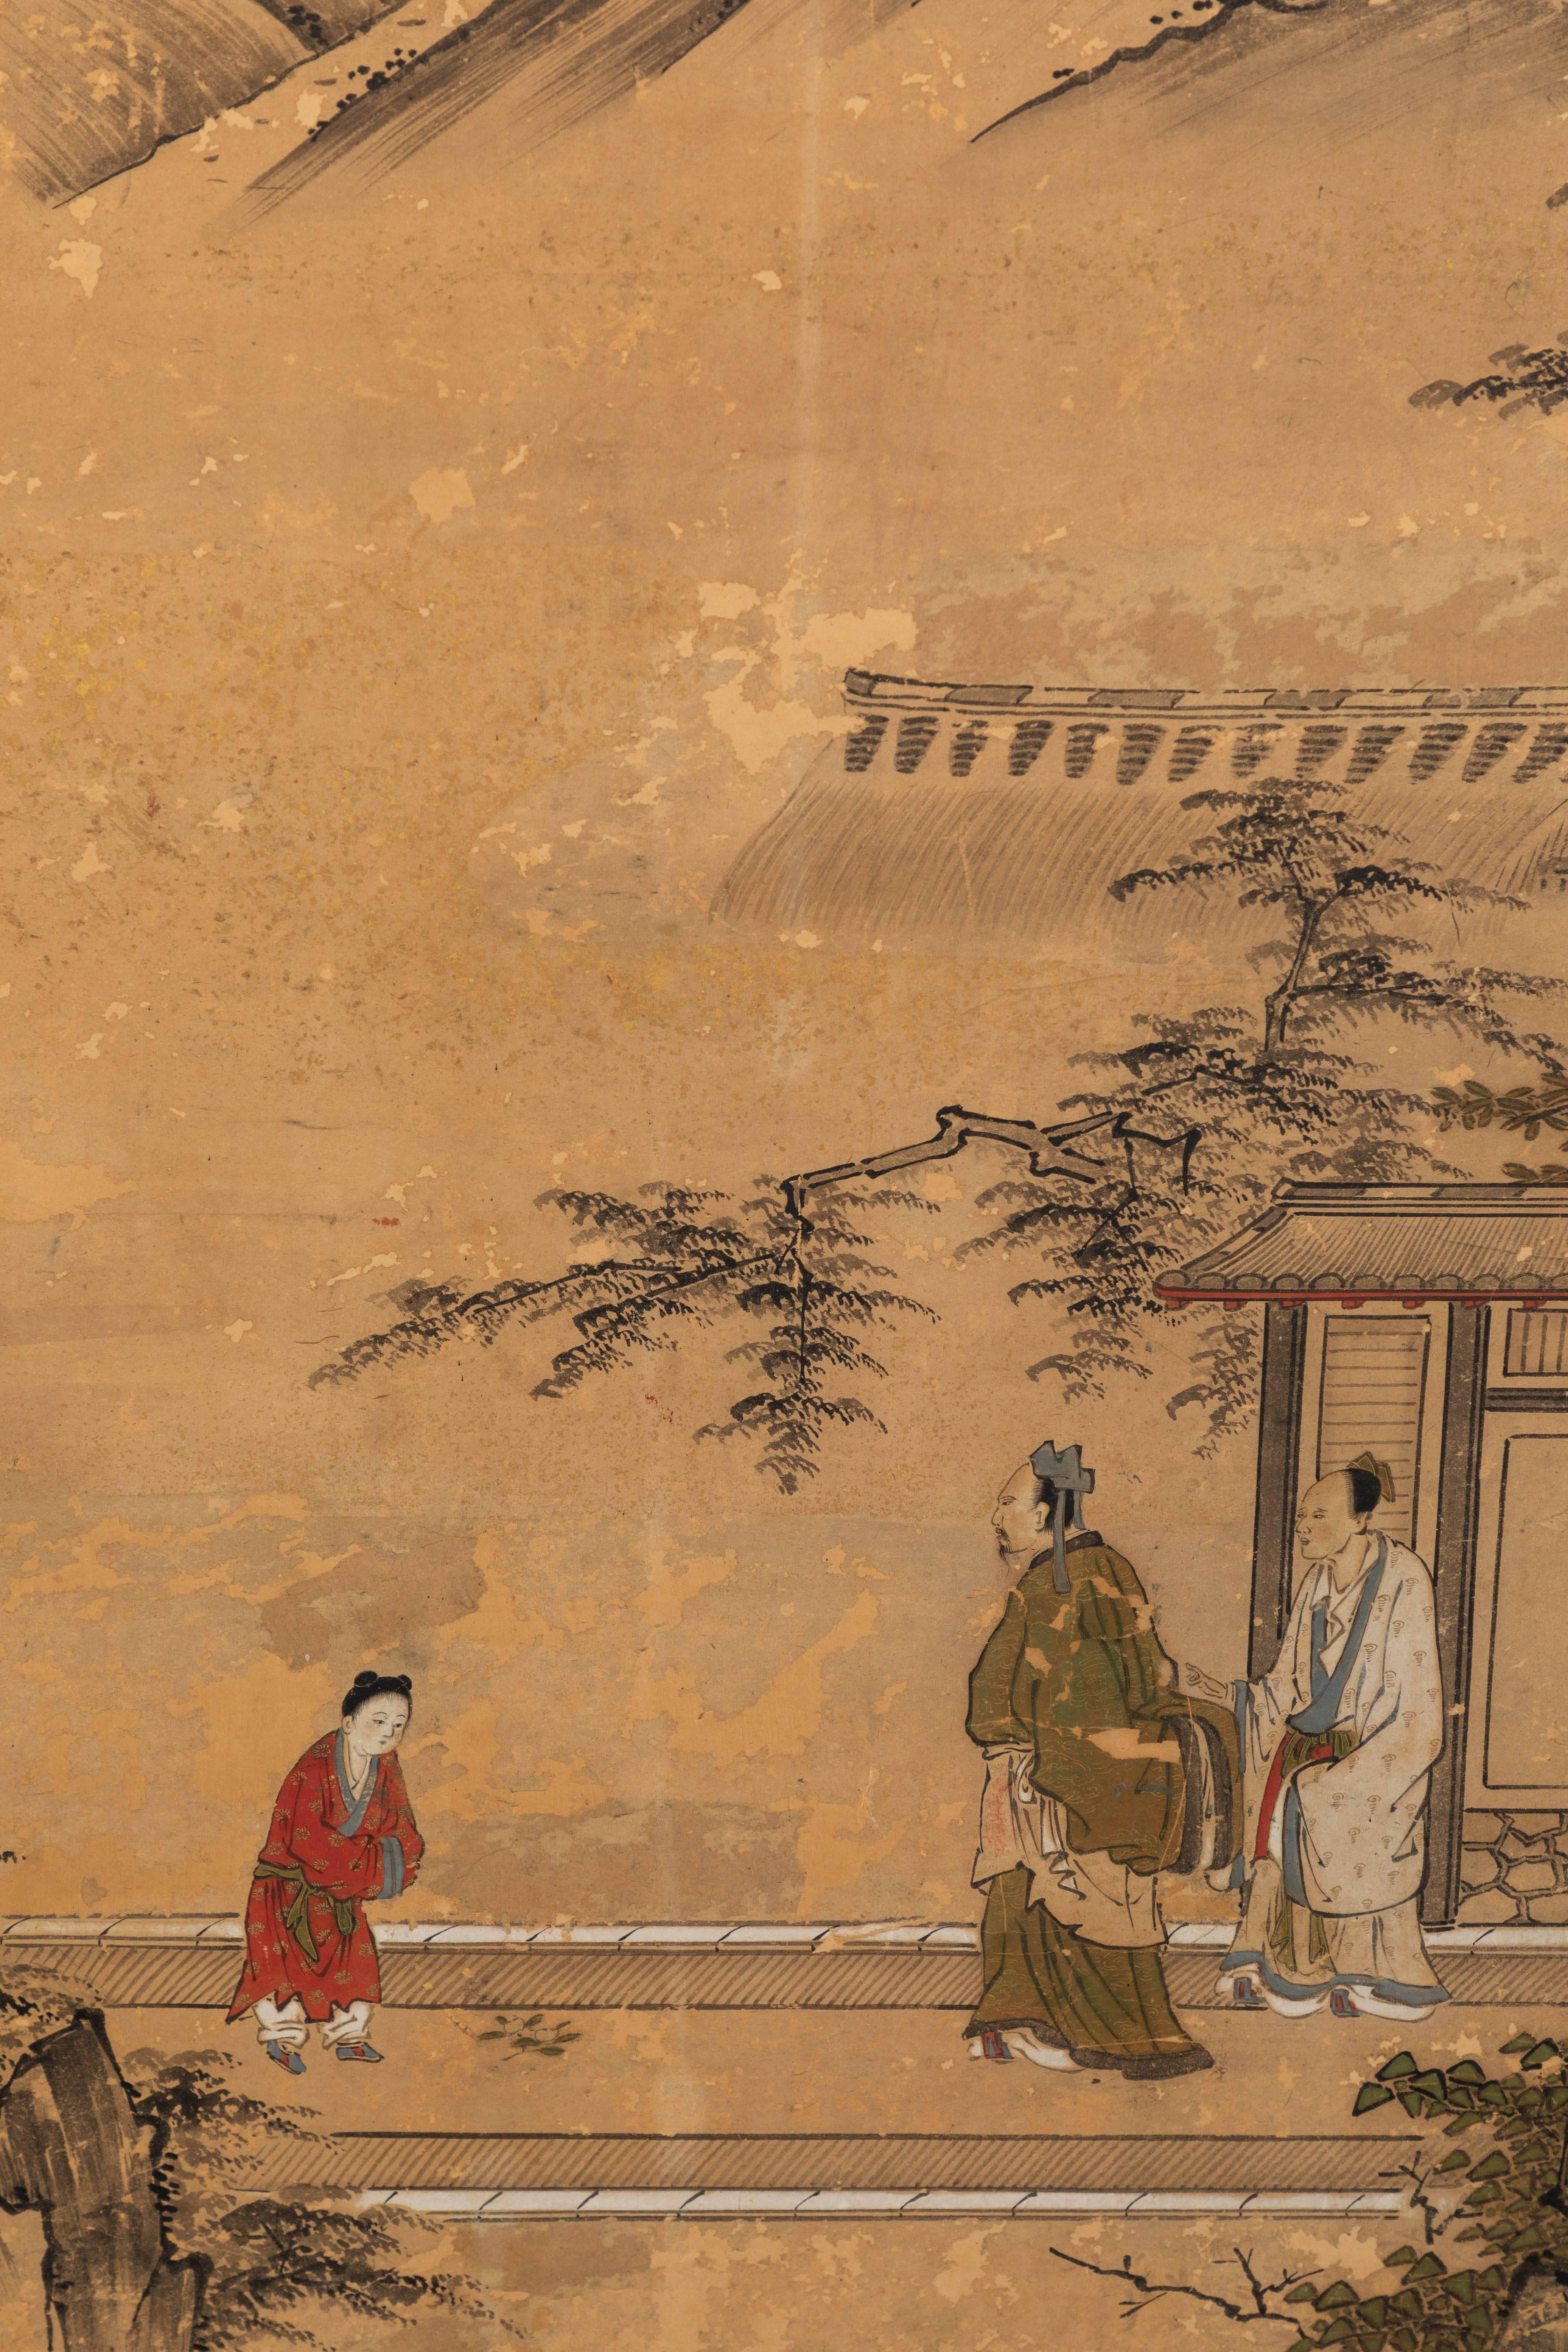 Antique Narrative Japanese Screen Panels on Gold Leaf, c. 1850-60 1